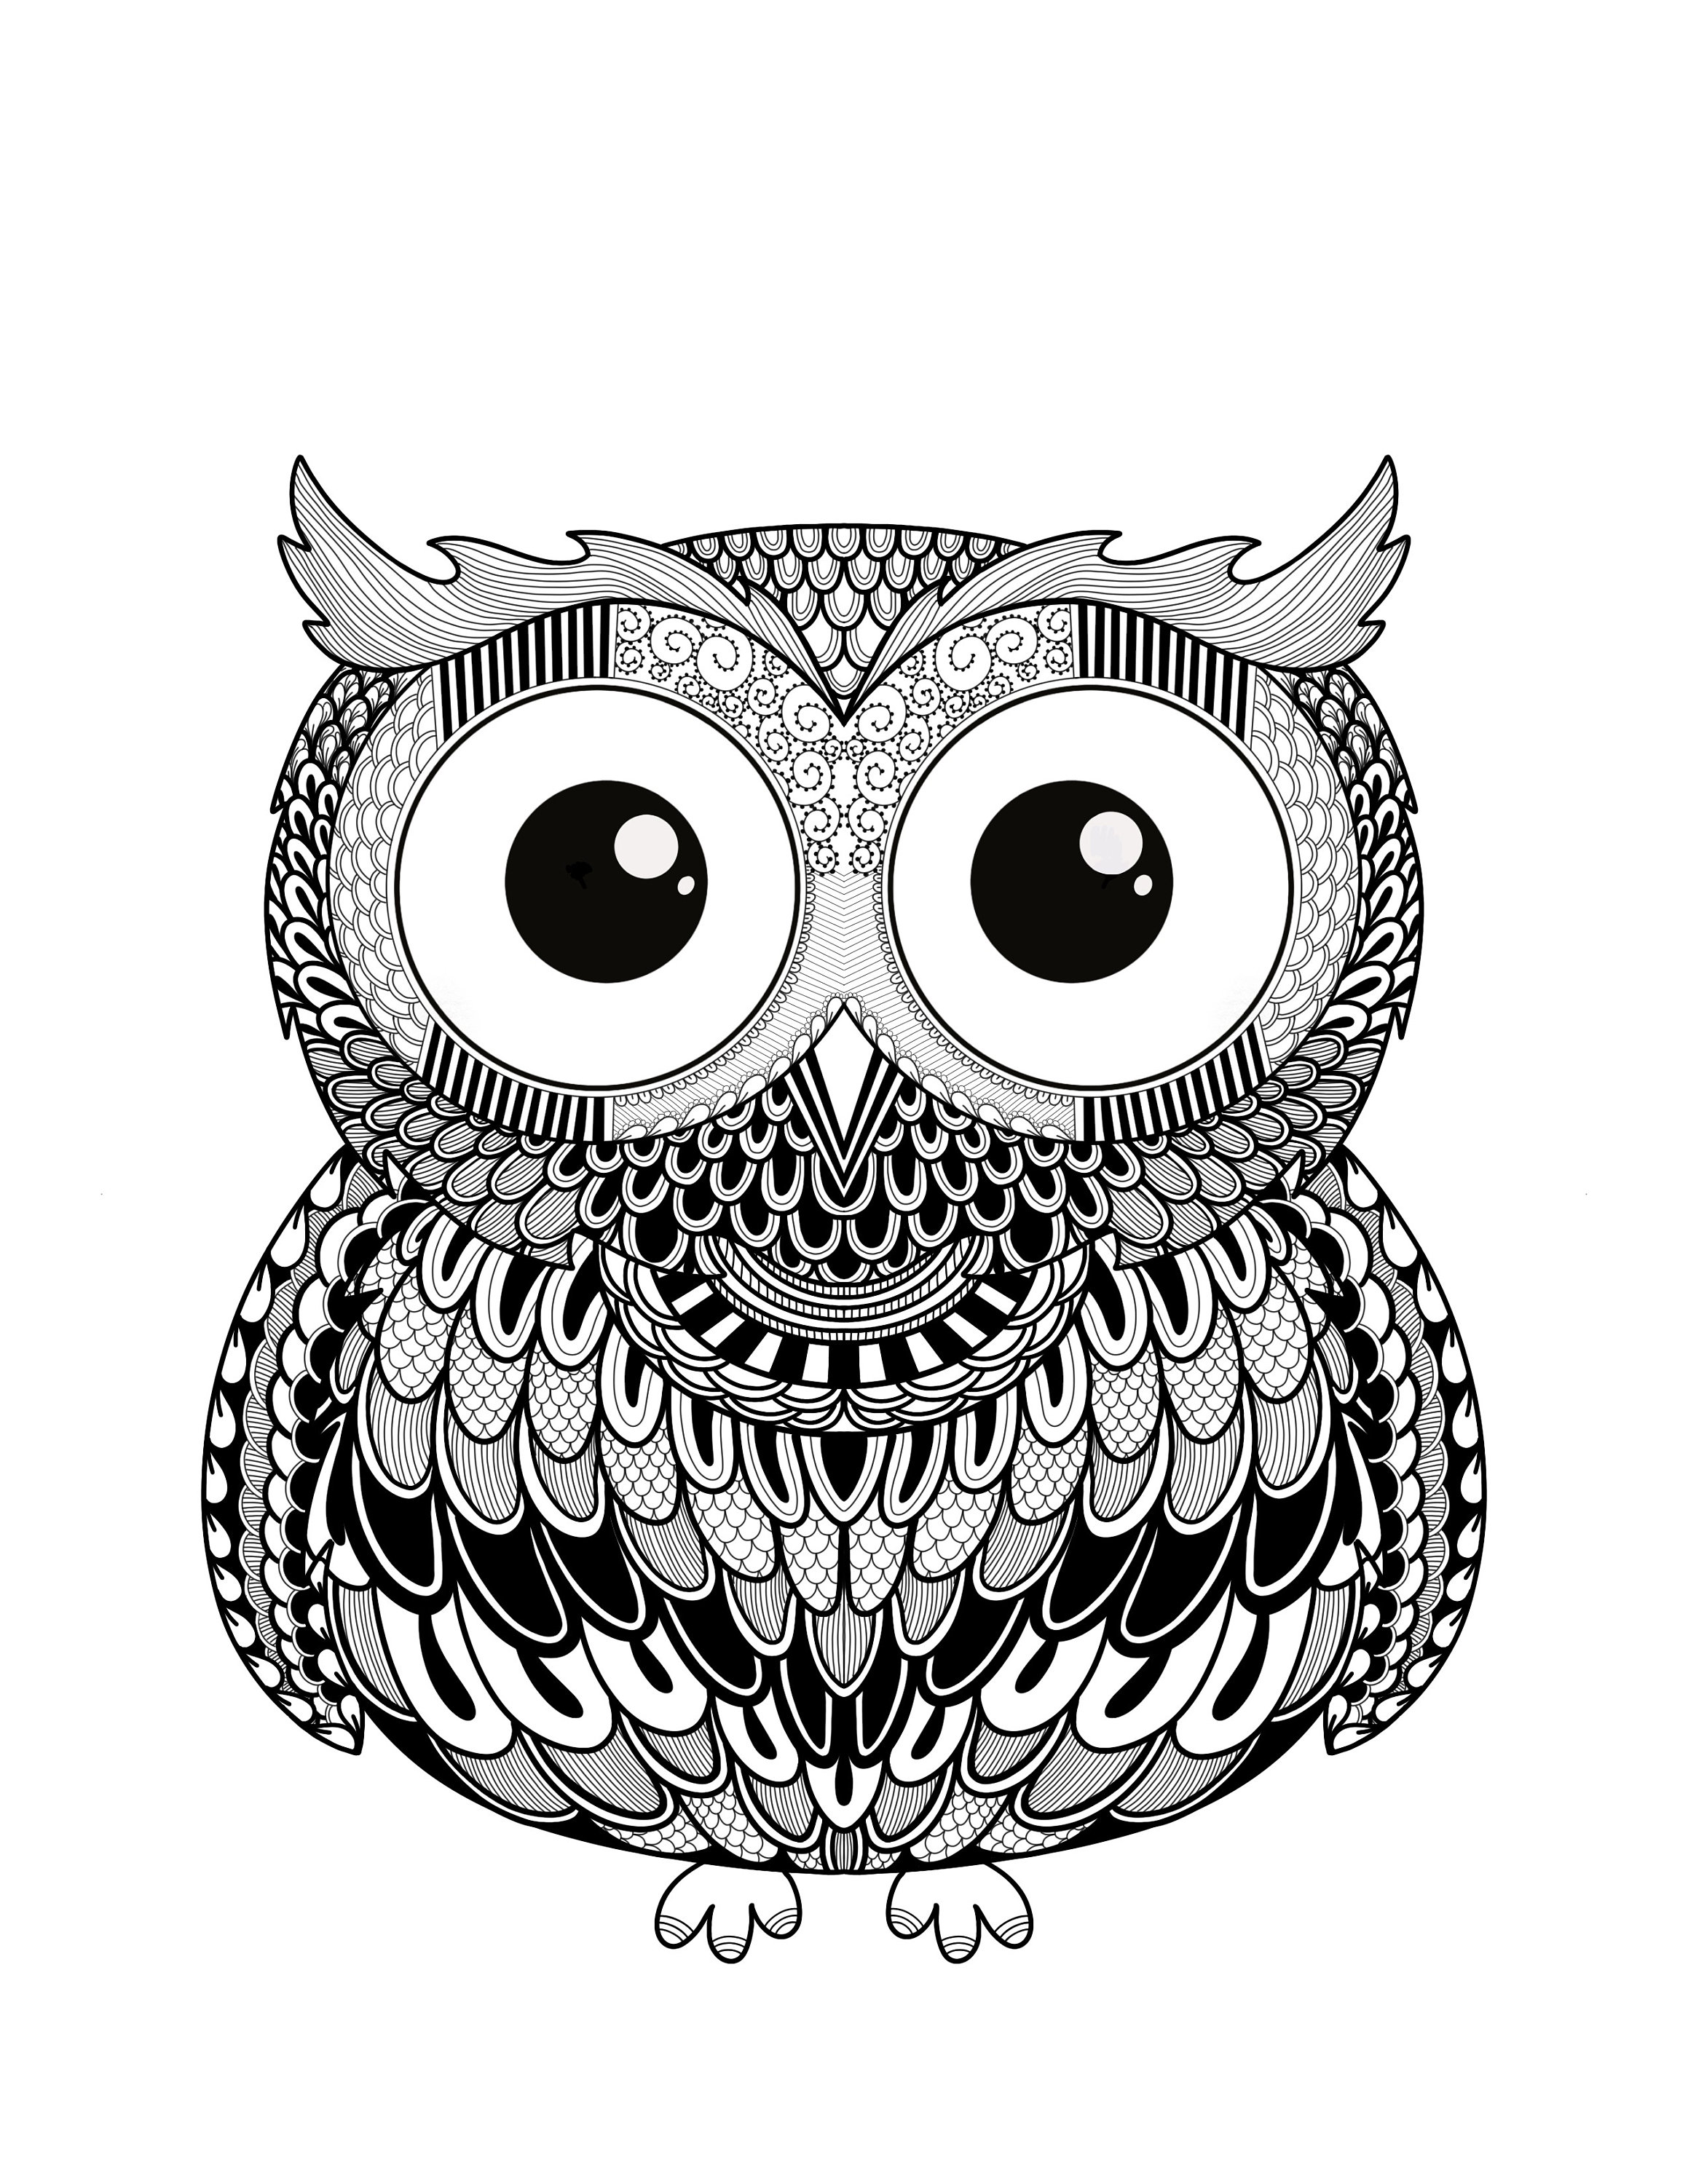 Cute owl coloring page digital download full page owl coloring page zentangle coloring page for adults pdf png jpg